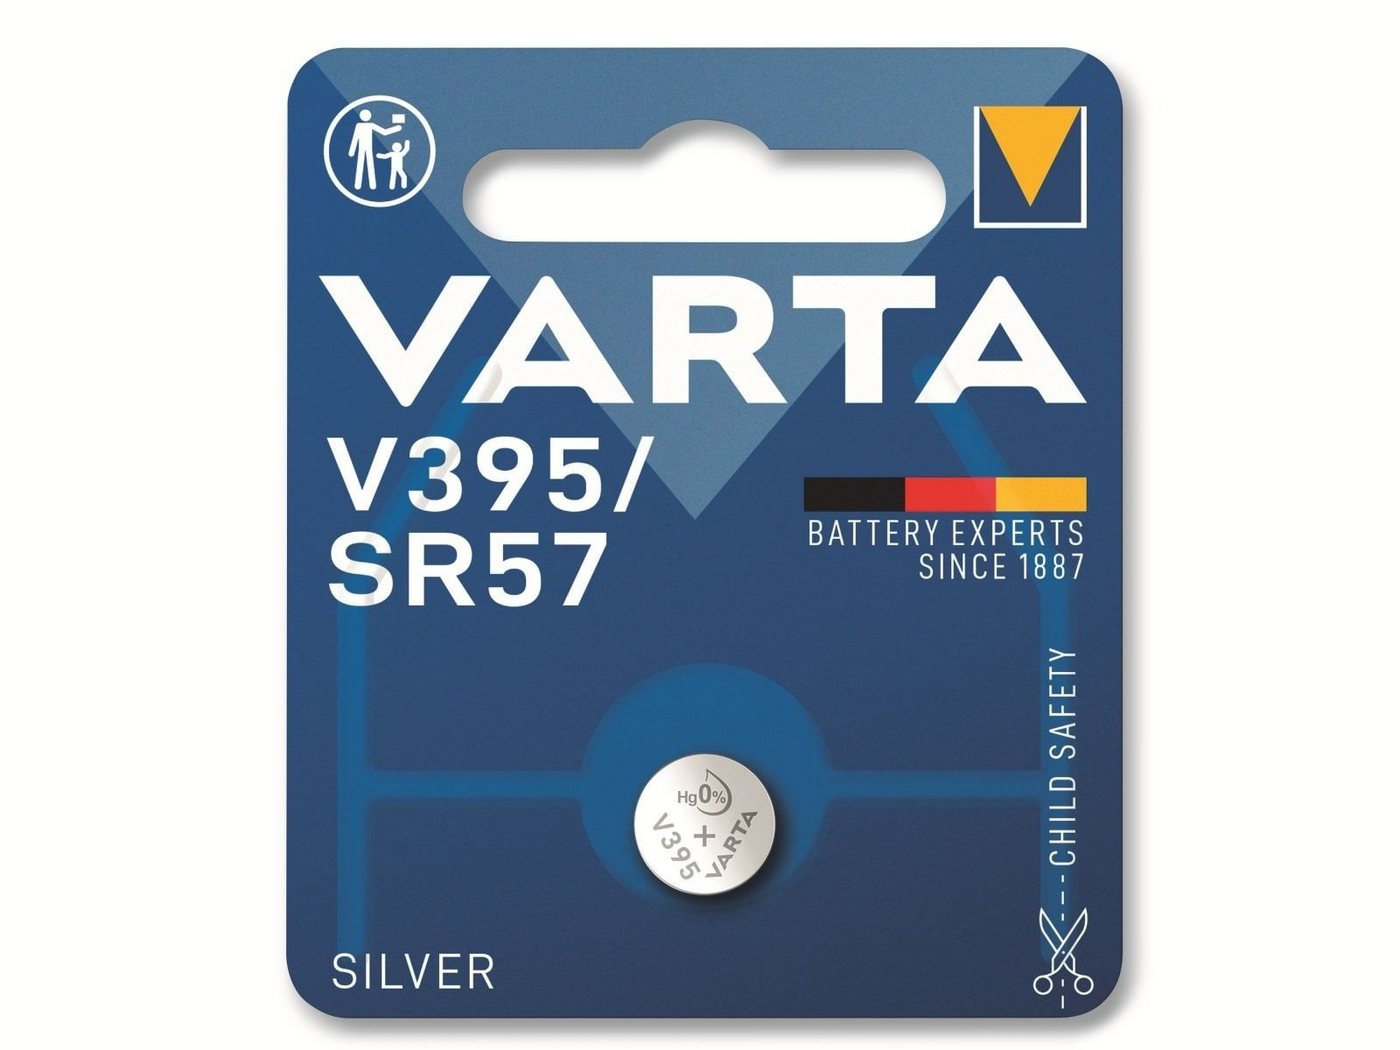 VARTA VARTA Knopfzelle Silver Oxide, 395 SR57, 1.55V, 1 Knopfzelle von VARTA